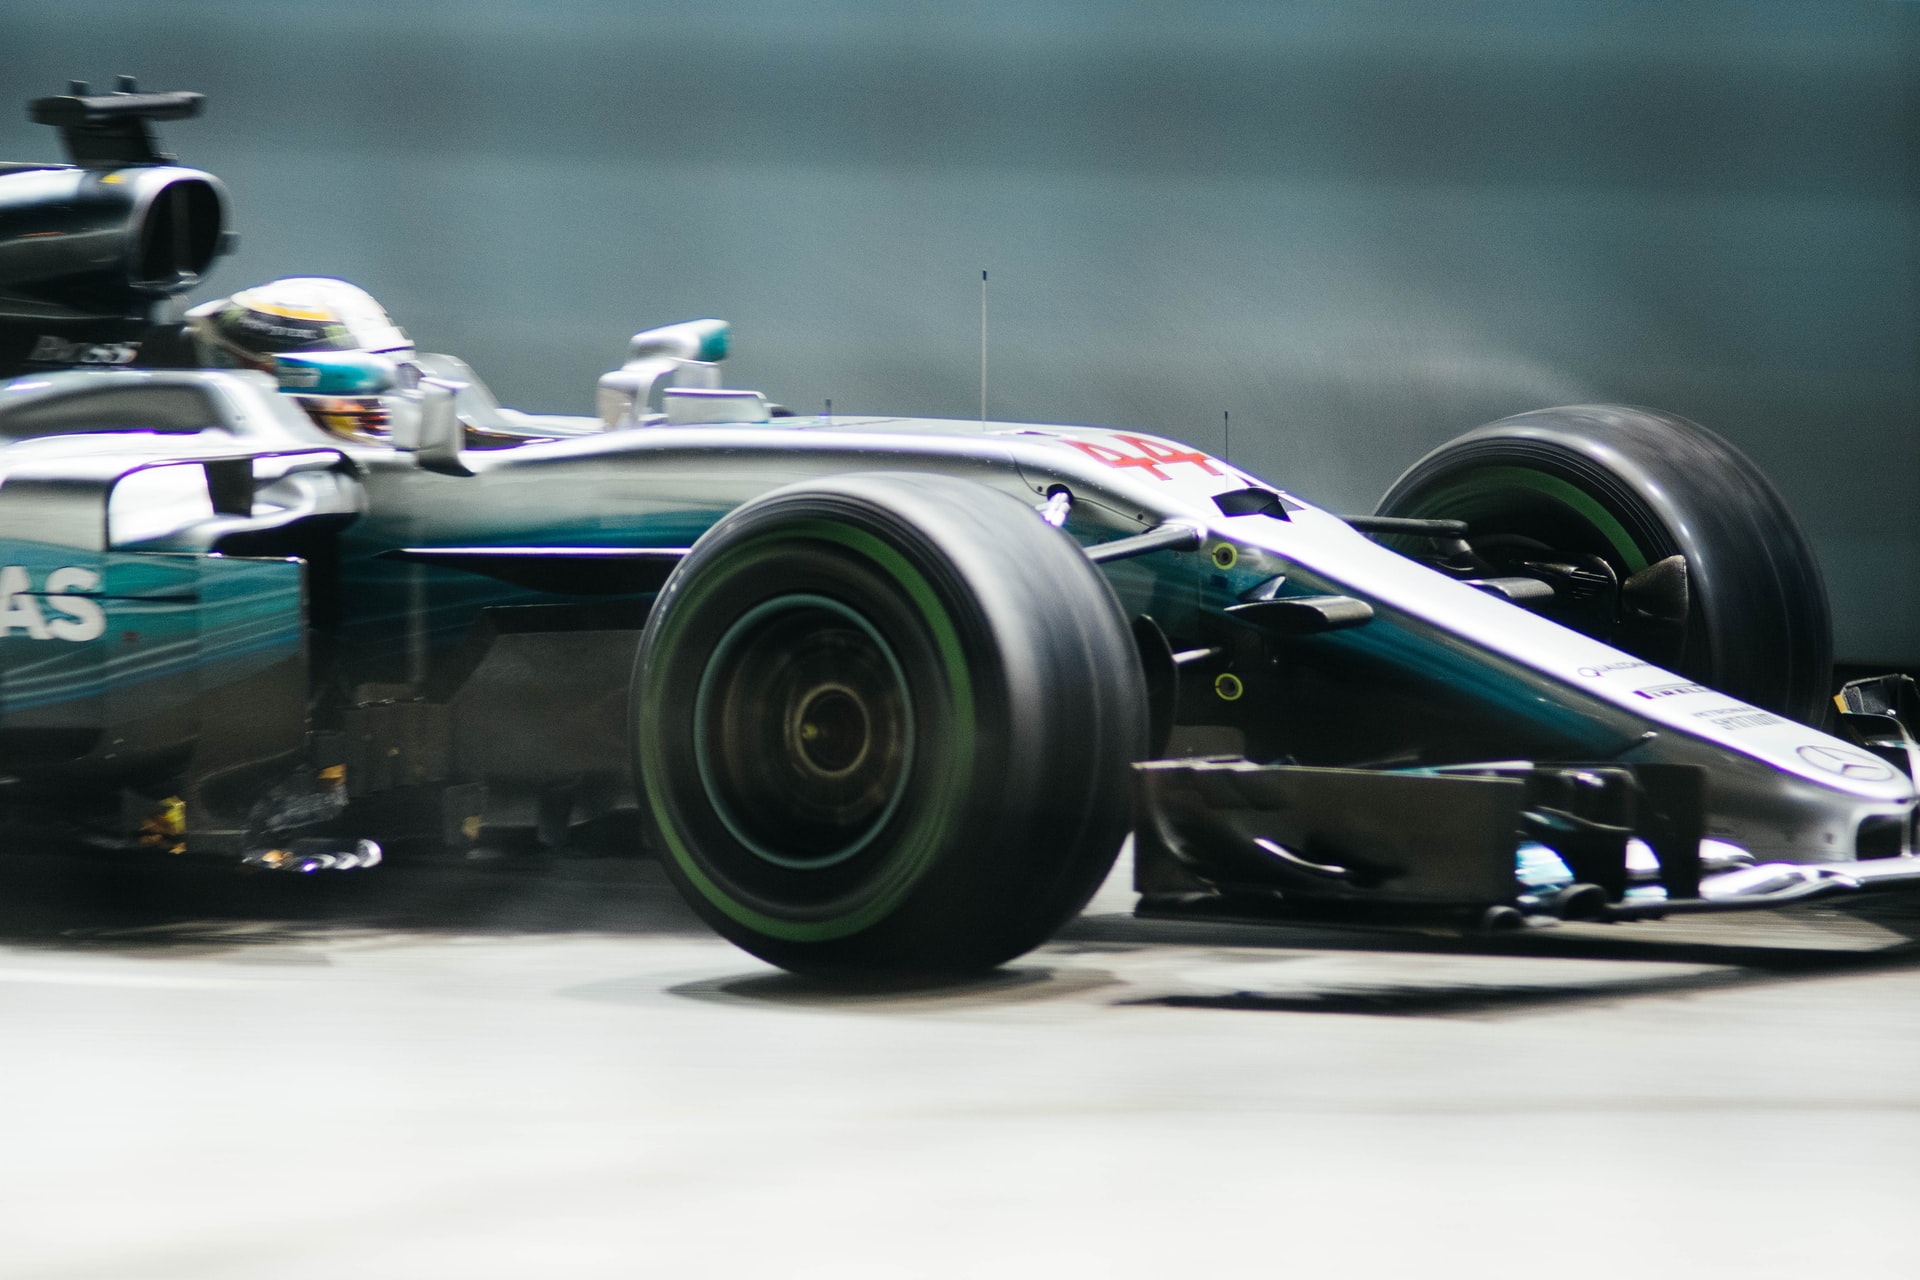 Image of a Formula 1 car